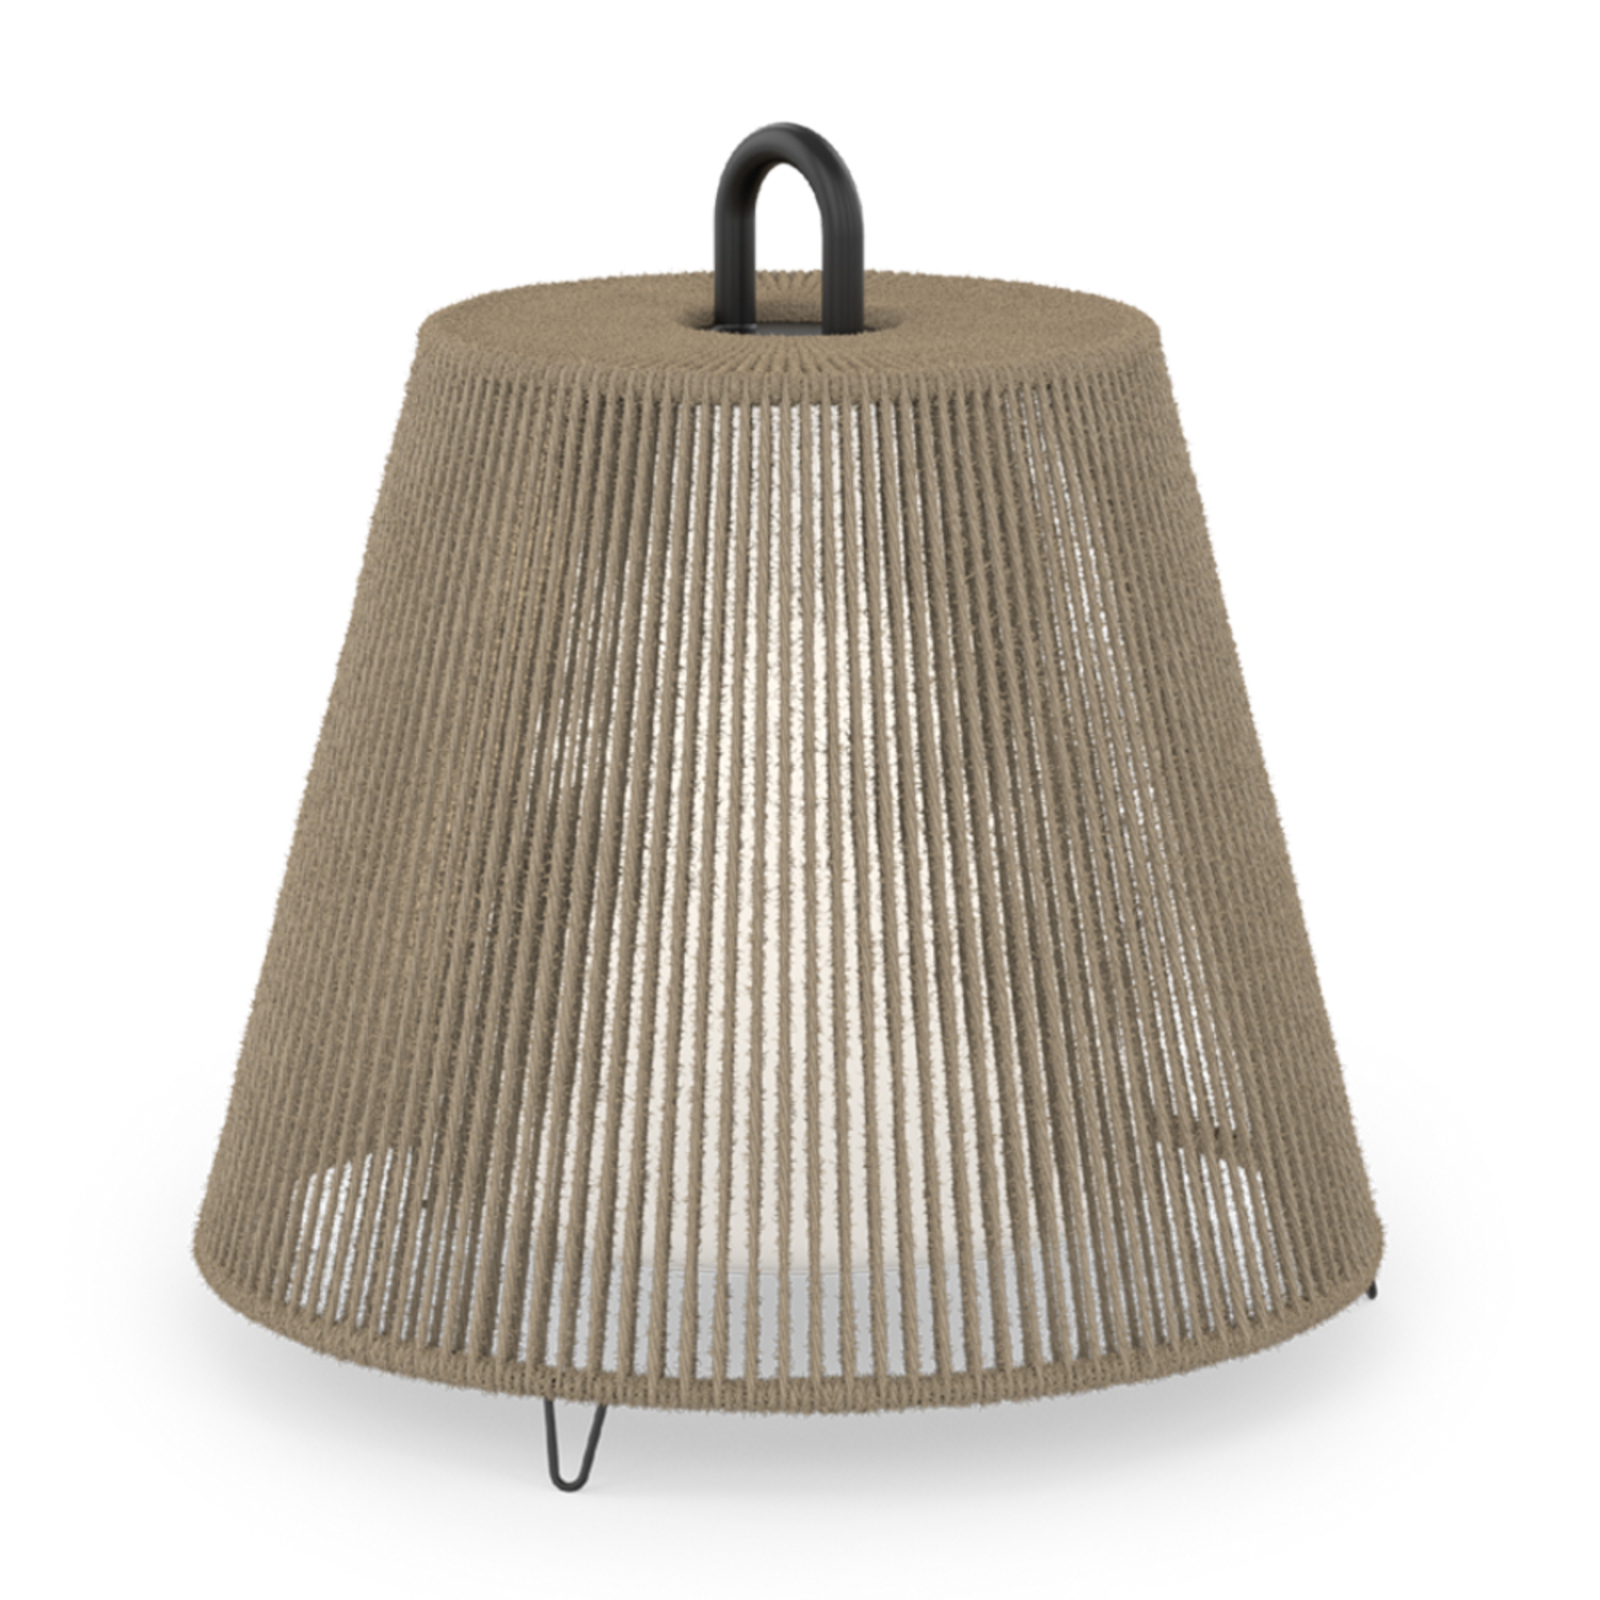 WEVER & DUCRÉ lampskärm Costa 1.0, sand, rep, Ø 39 cm